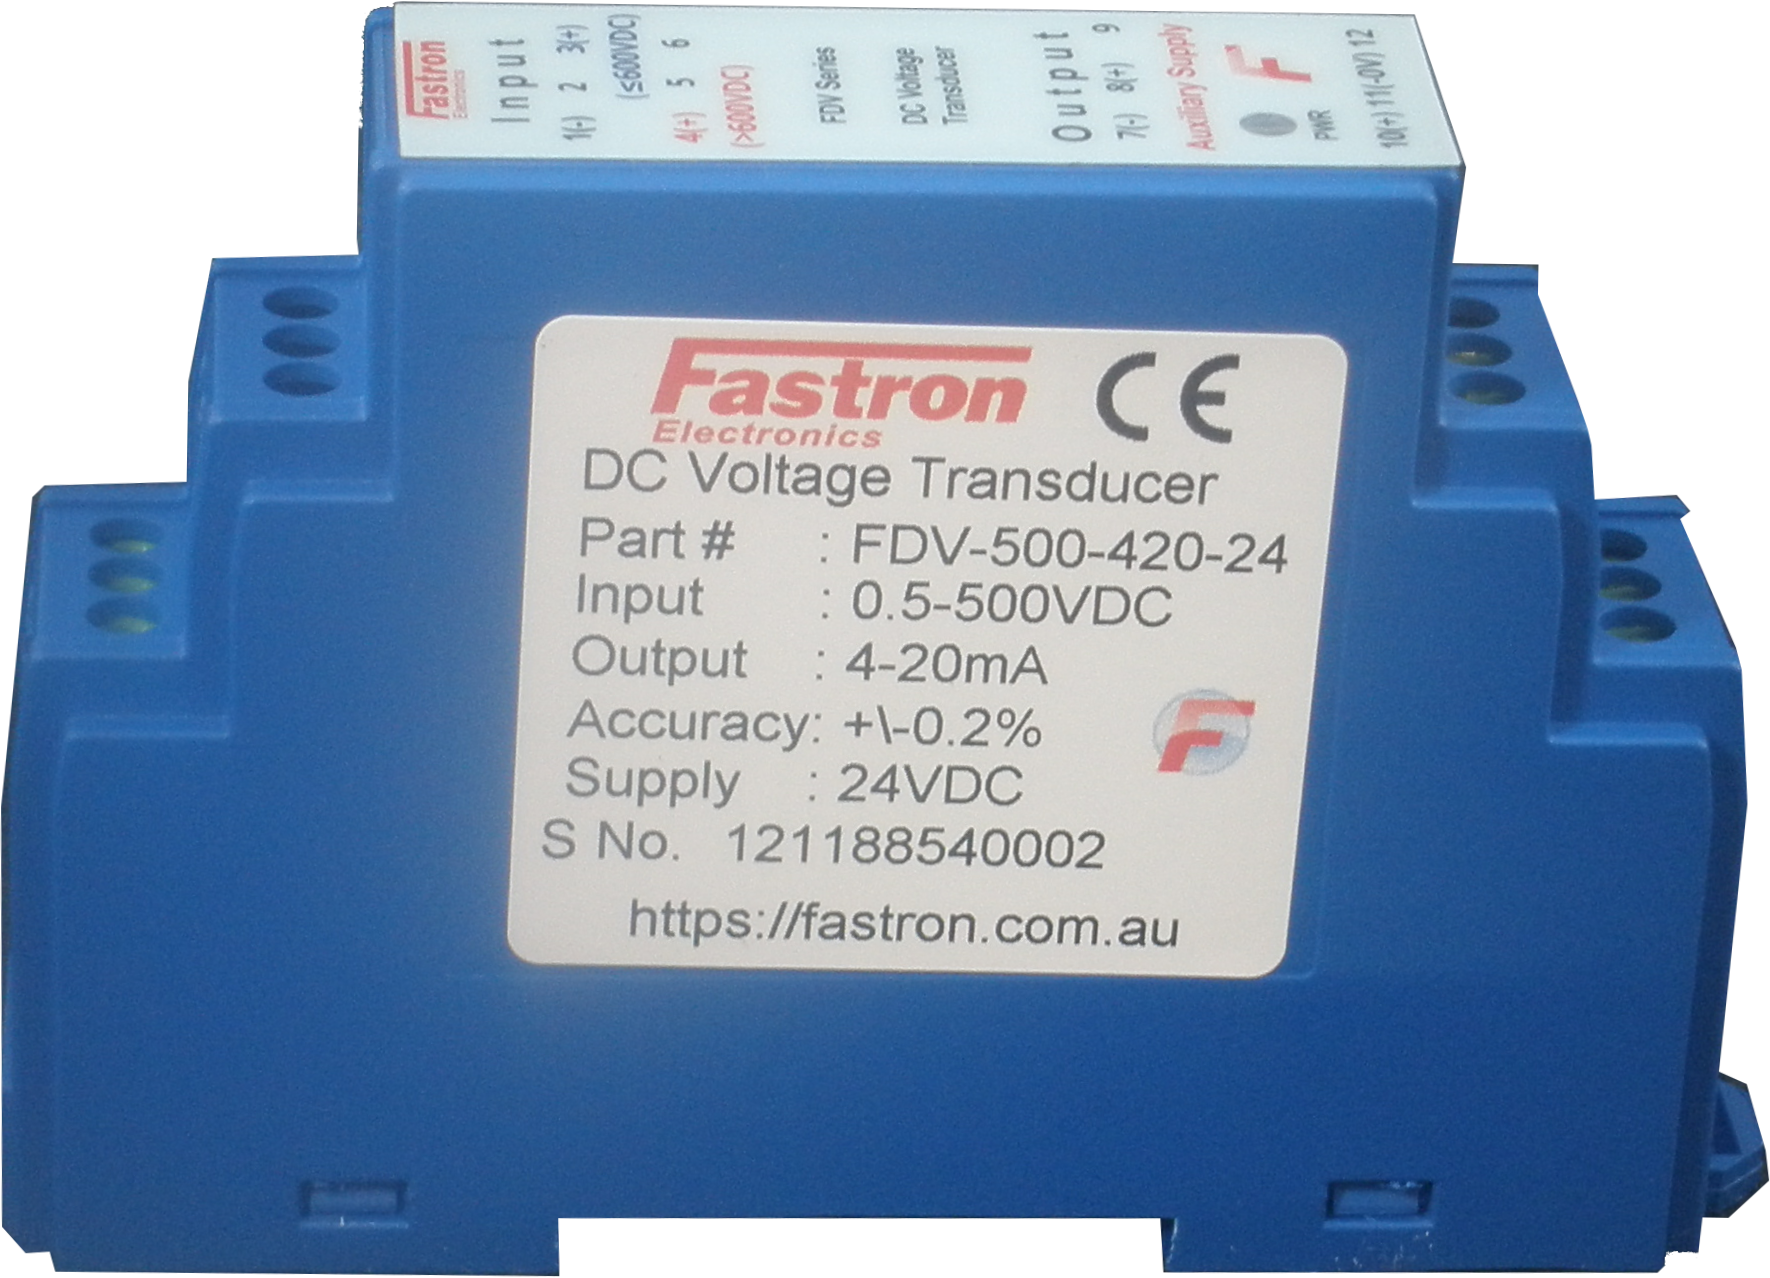 FDV-100-420-24, DC Voltage Transducer, Din Rail Mount, 0-100VDC, 4-20mA output, 24VDC Supply Voltage, 150mS Response